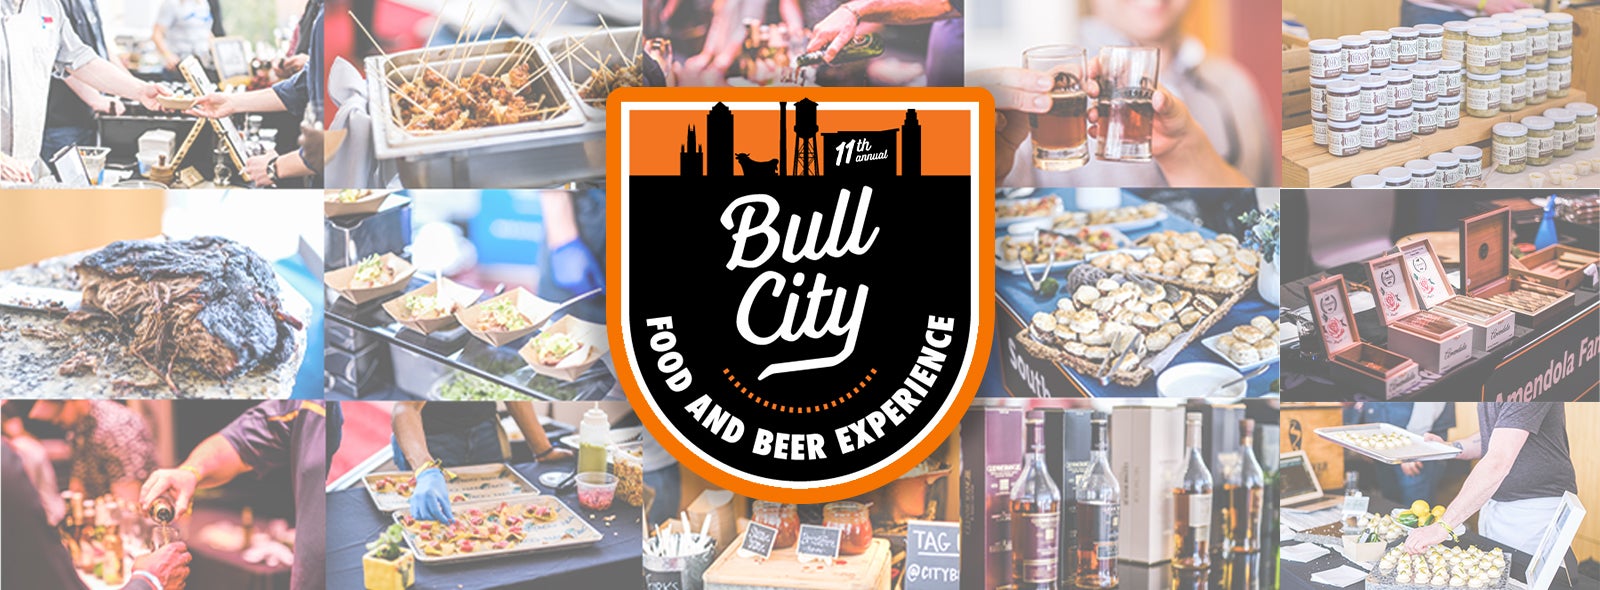 Bull City Food & Beer Experience